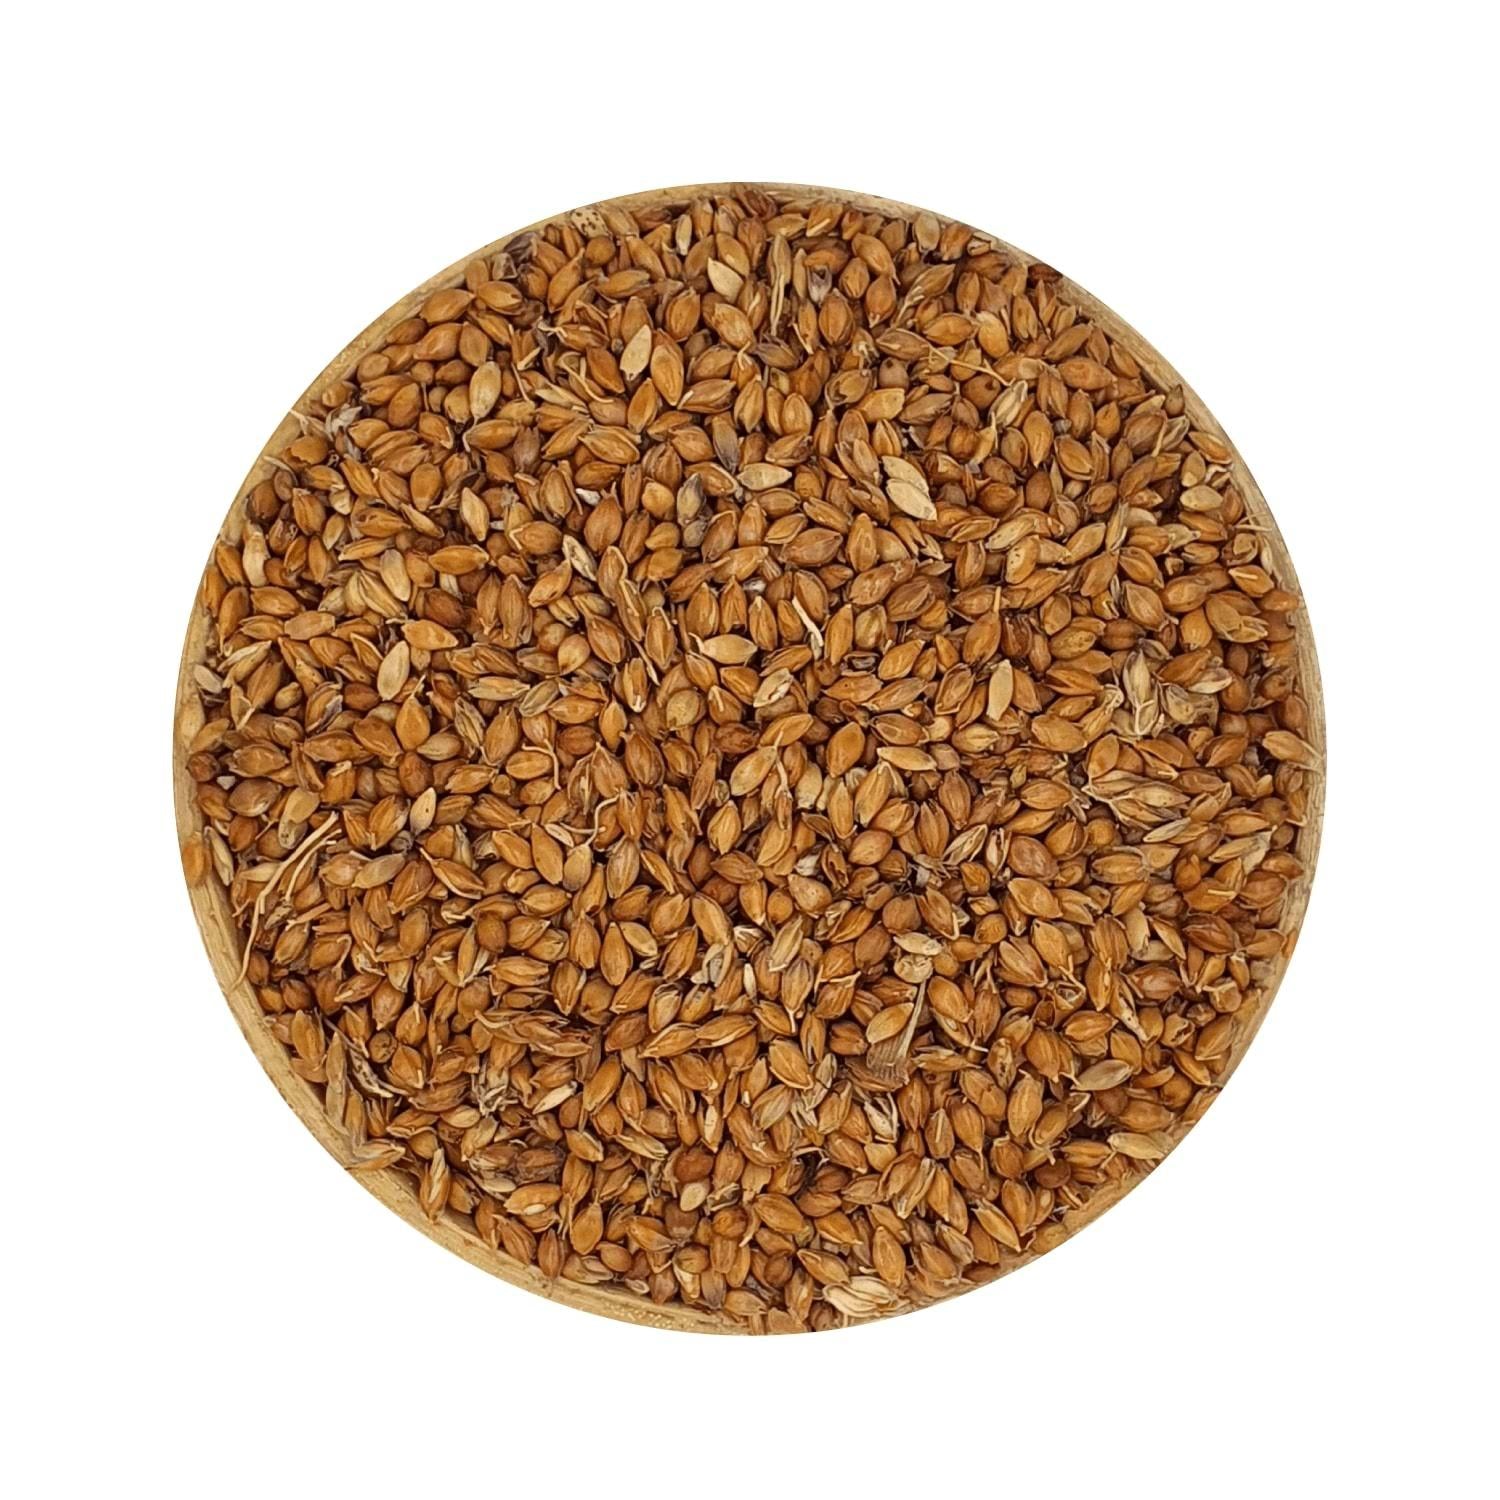 Süpürge otu tohumu (100g)